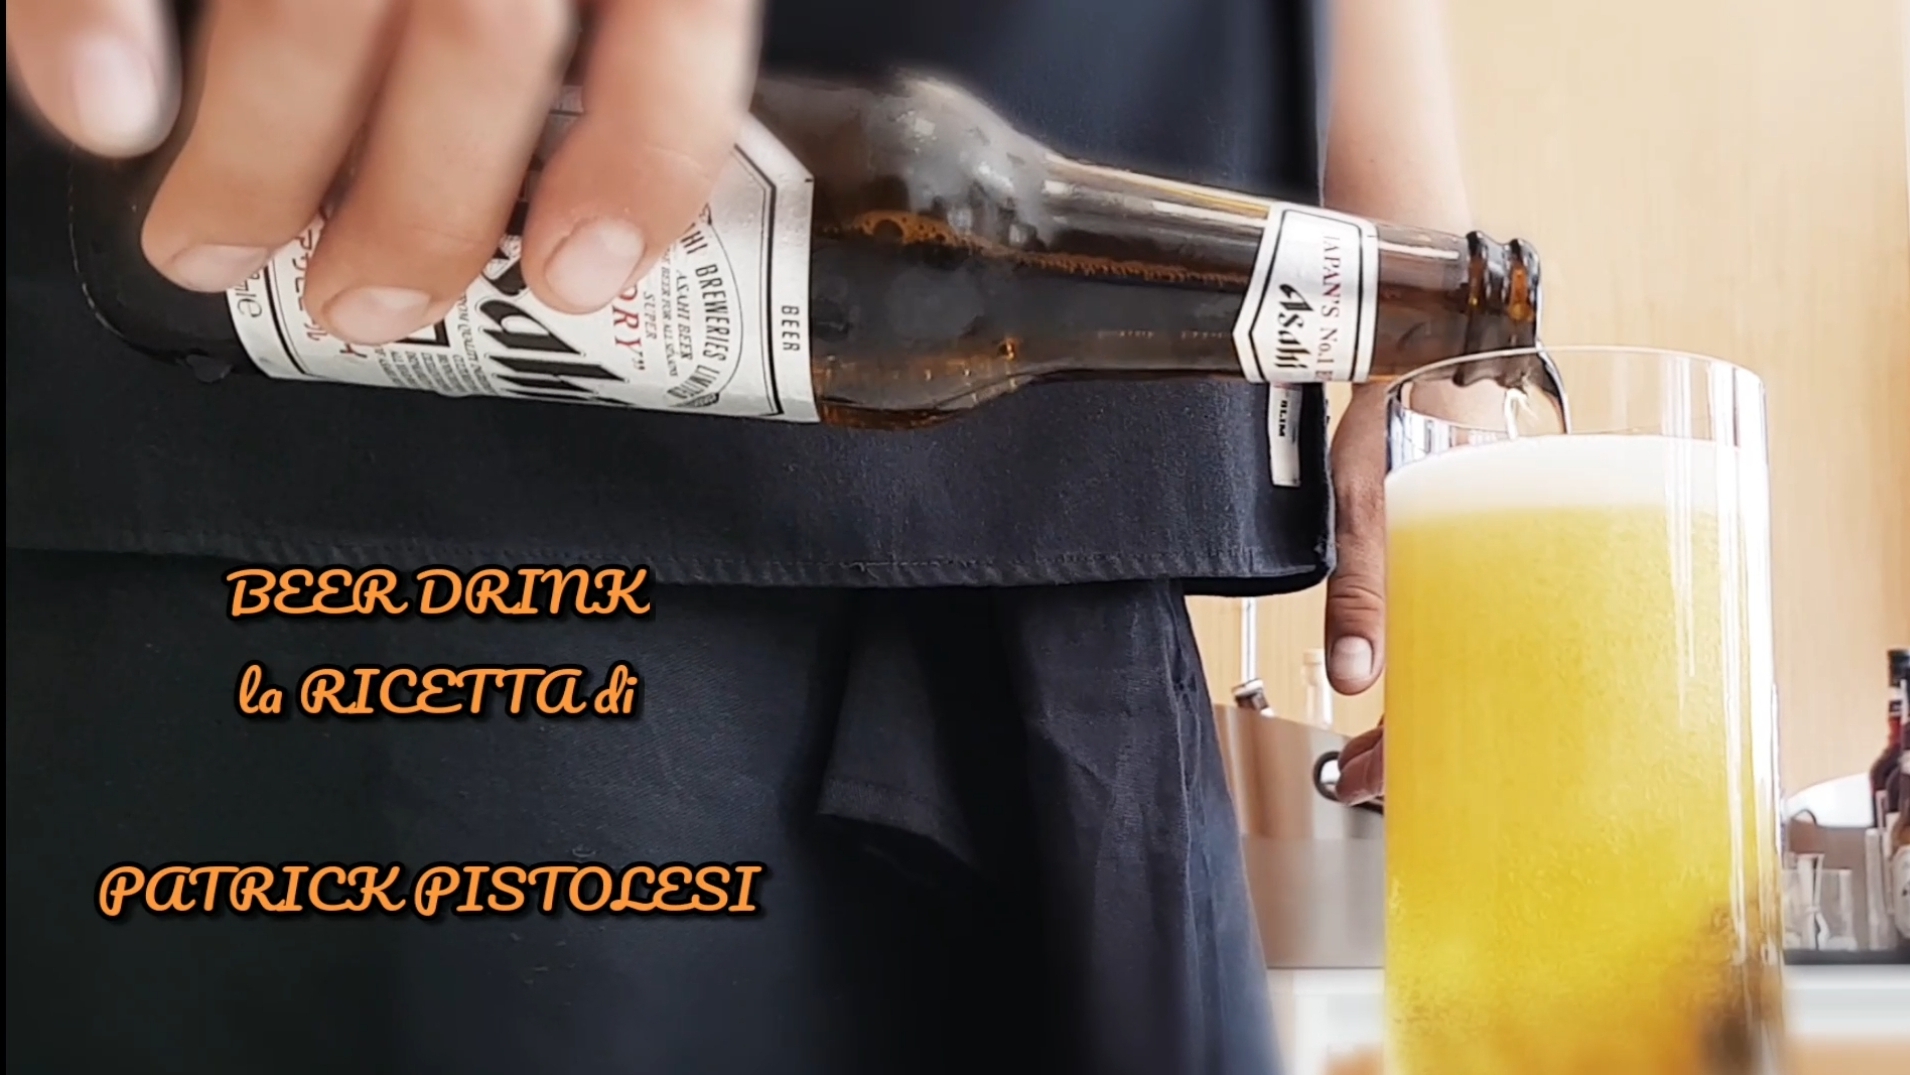 Patrick Pistolesi ecco tre ricette di beer drink beverini VIDEO